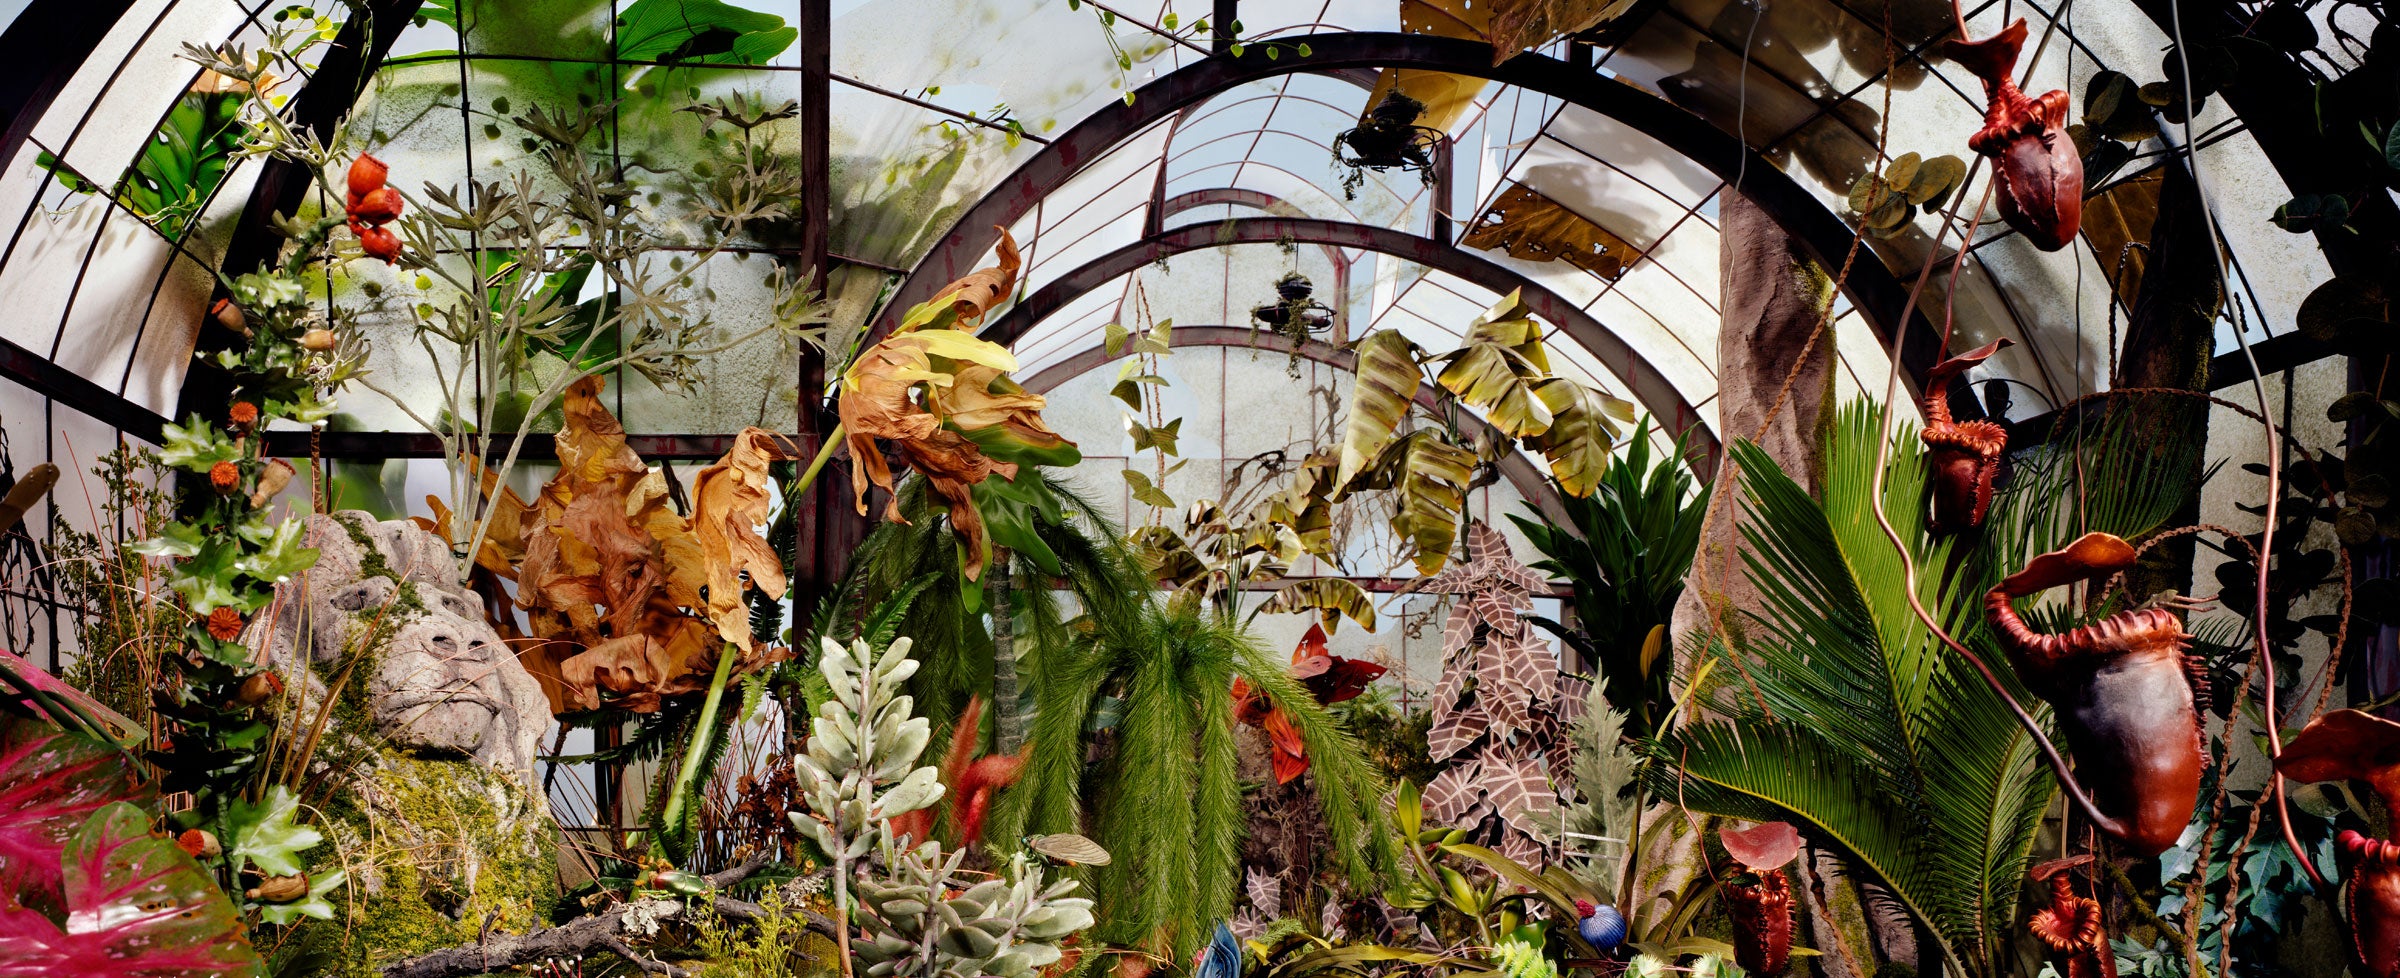 Crop of Botanic Garden by Lori Nix, beautiful florals in a greenhouse.